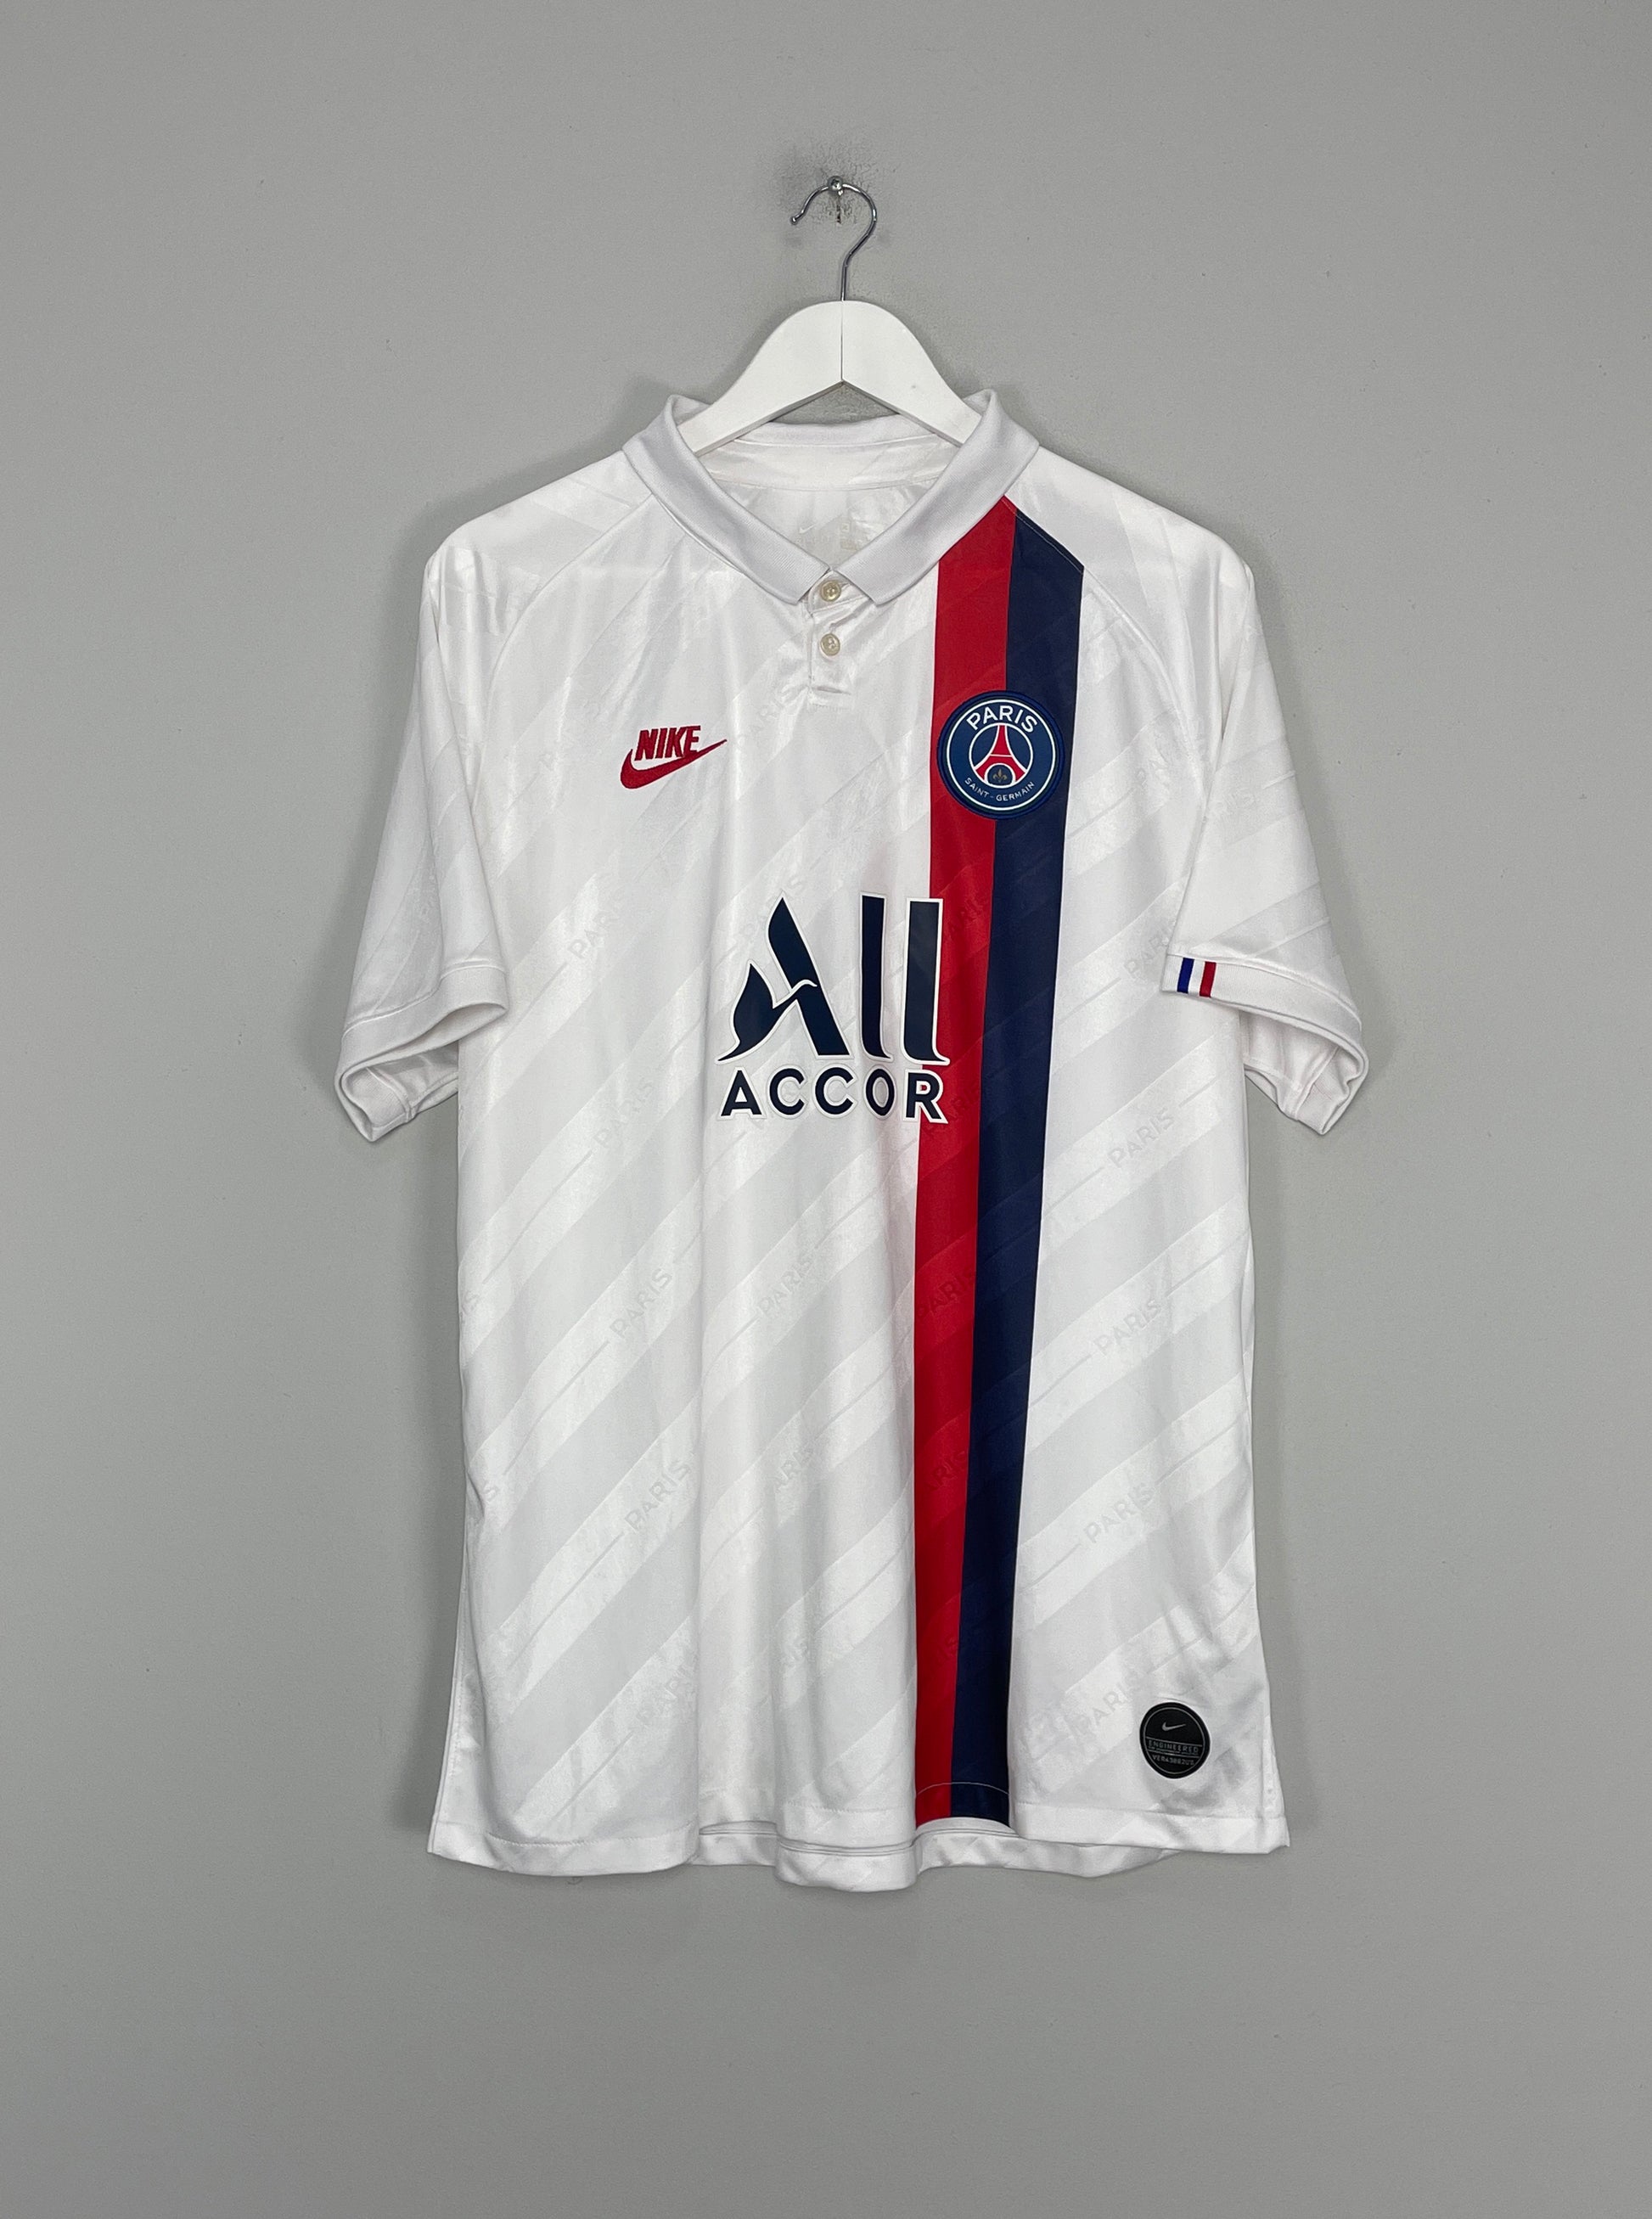 Cult Kits - Buy PSG Shirts, Classic Football Kits